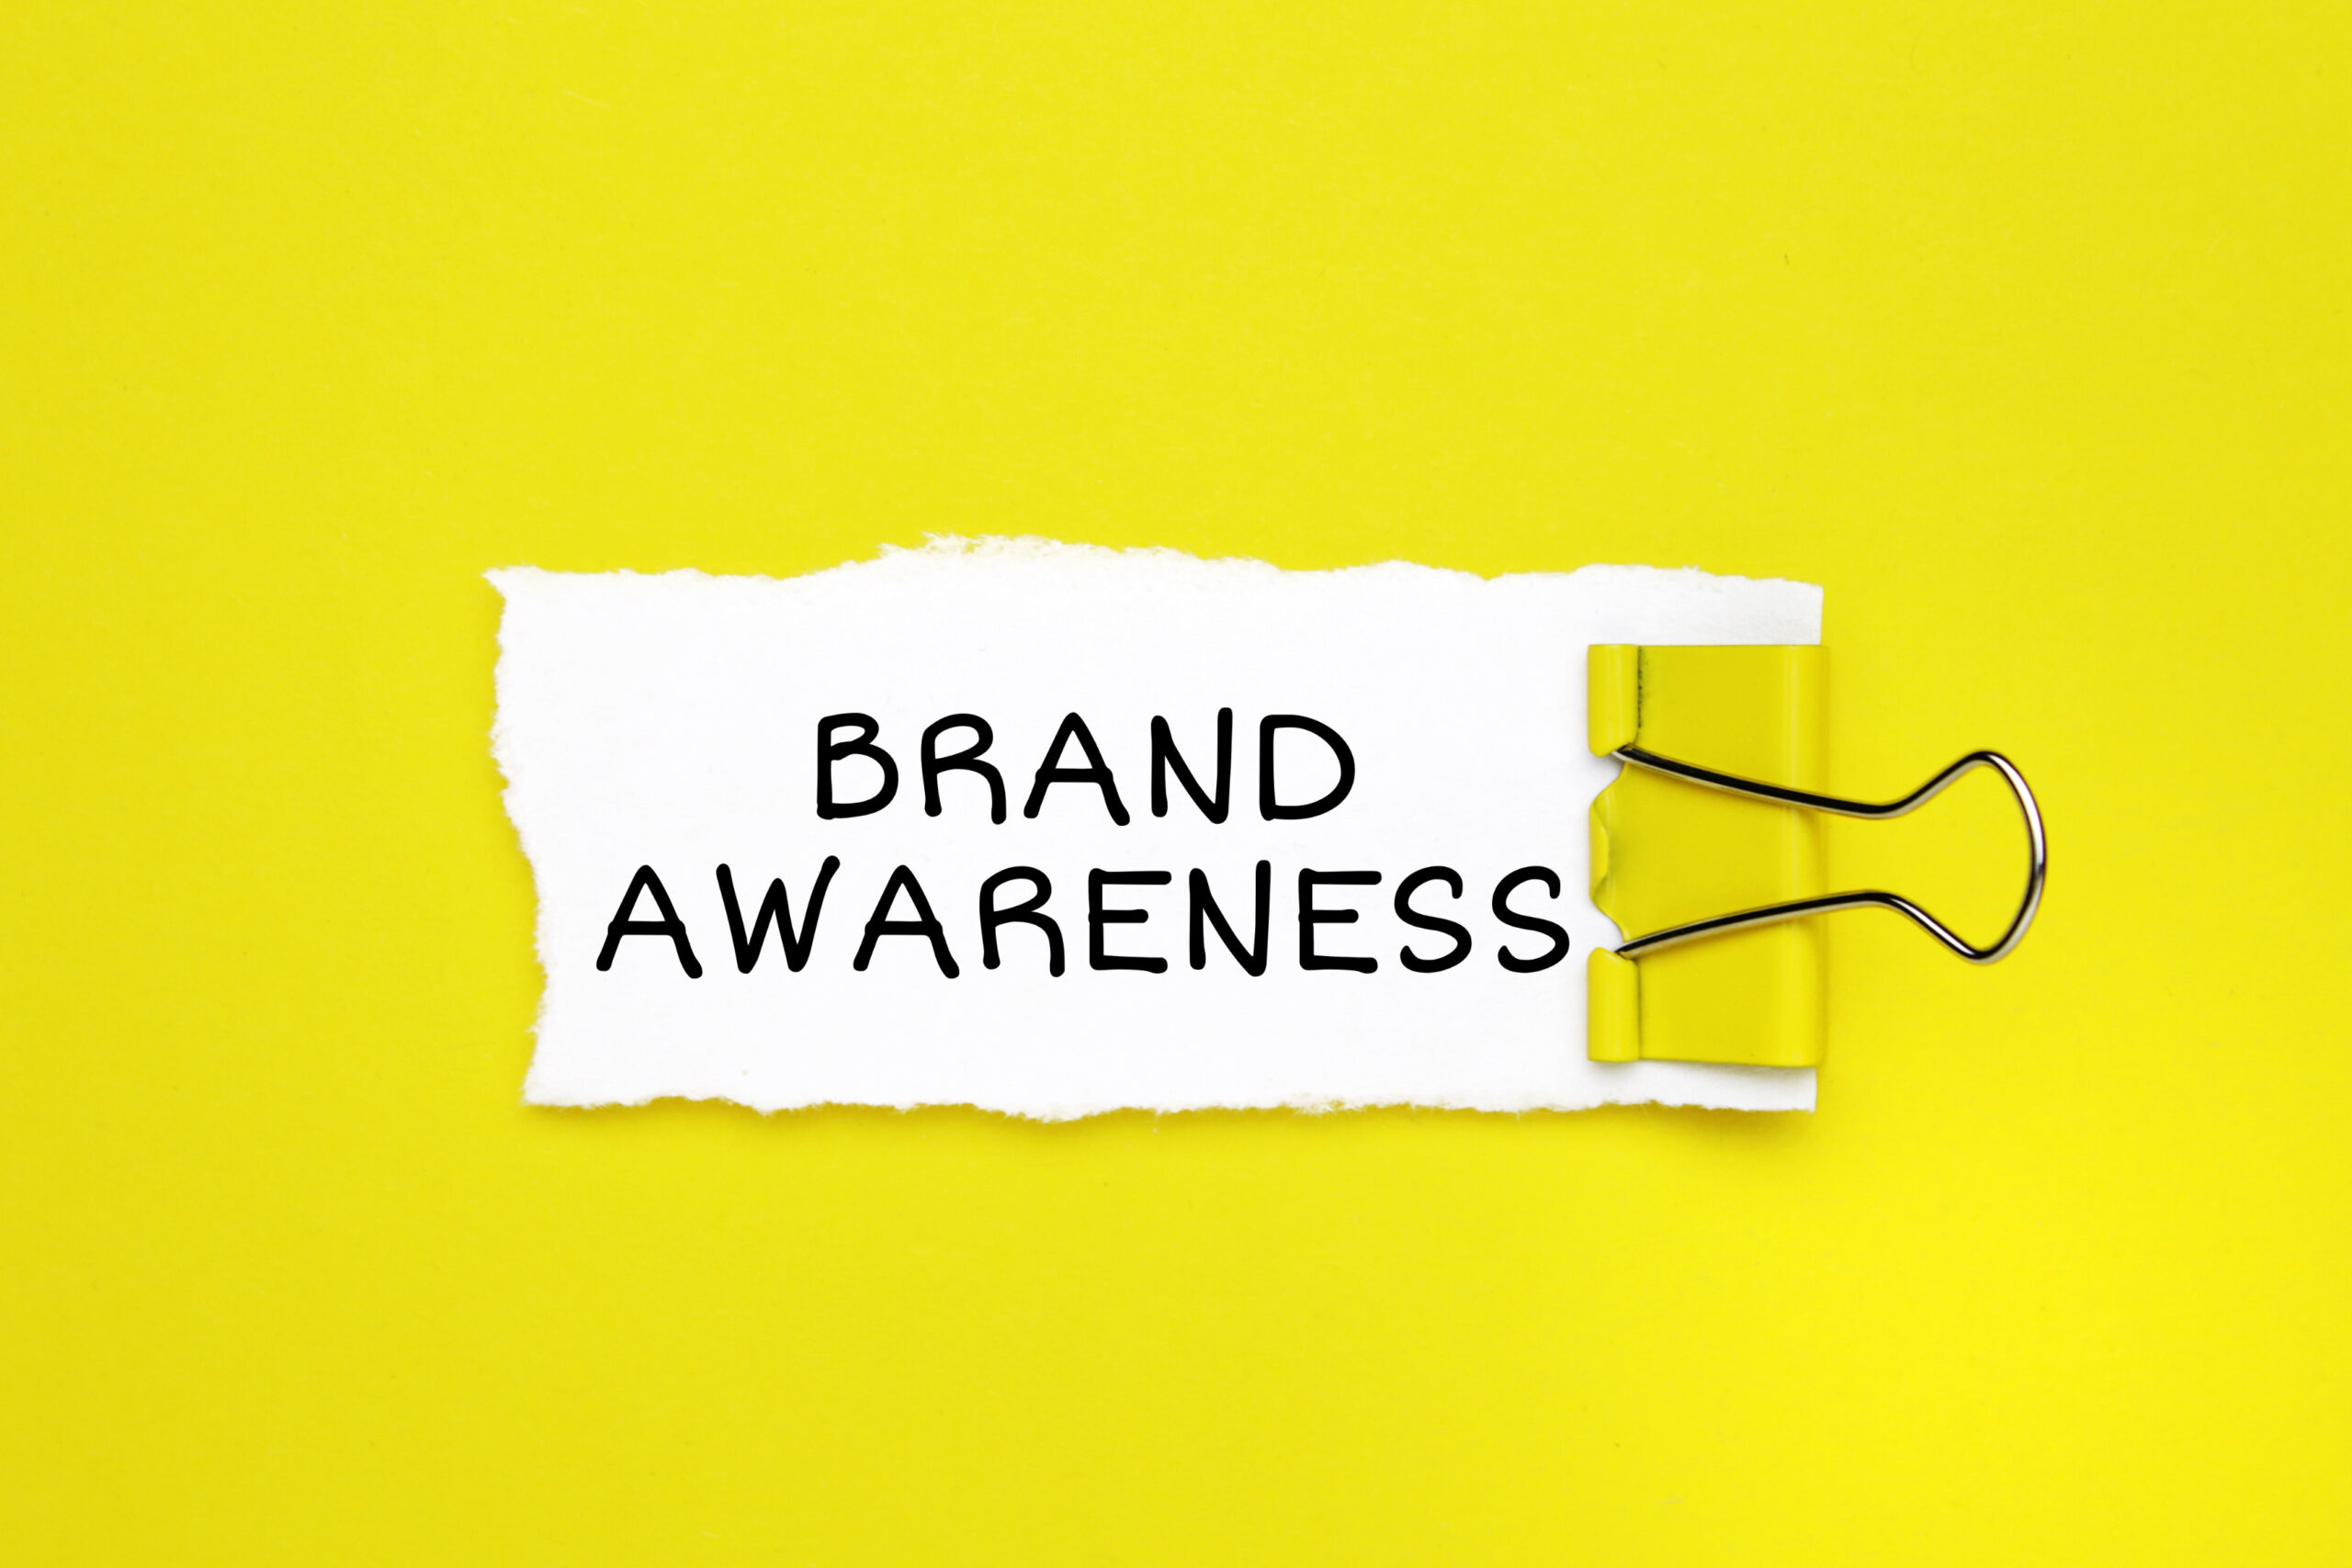 How to Build Brand Awareness Using Social Media